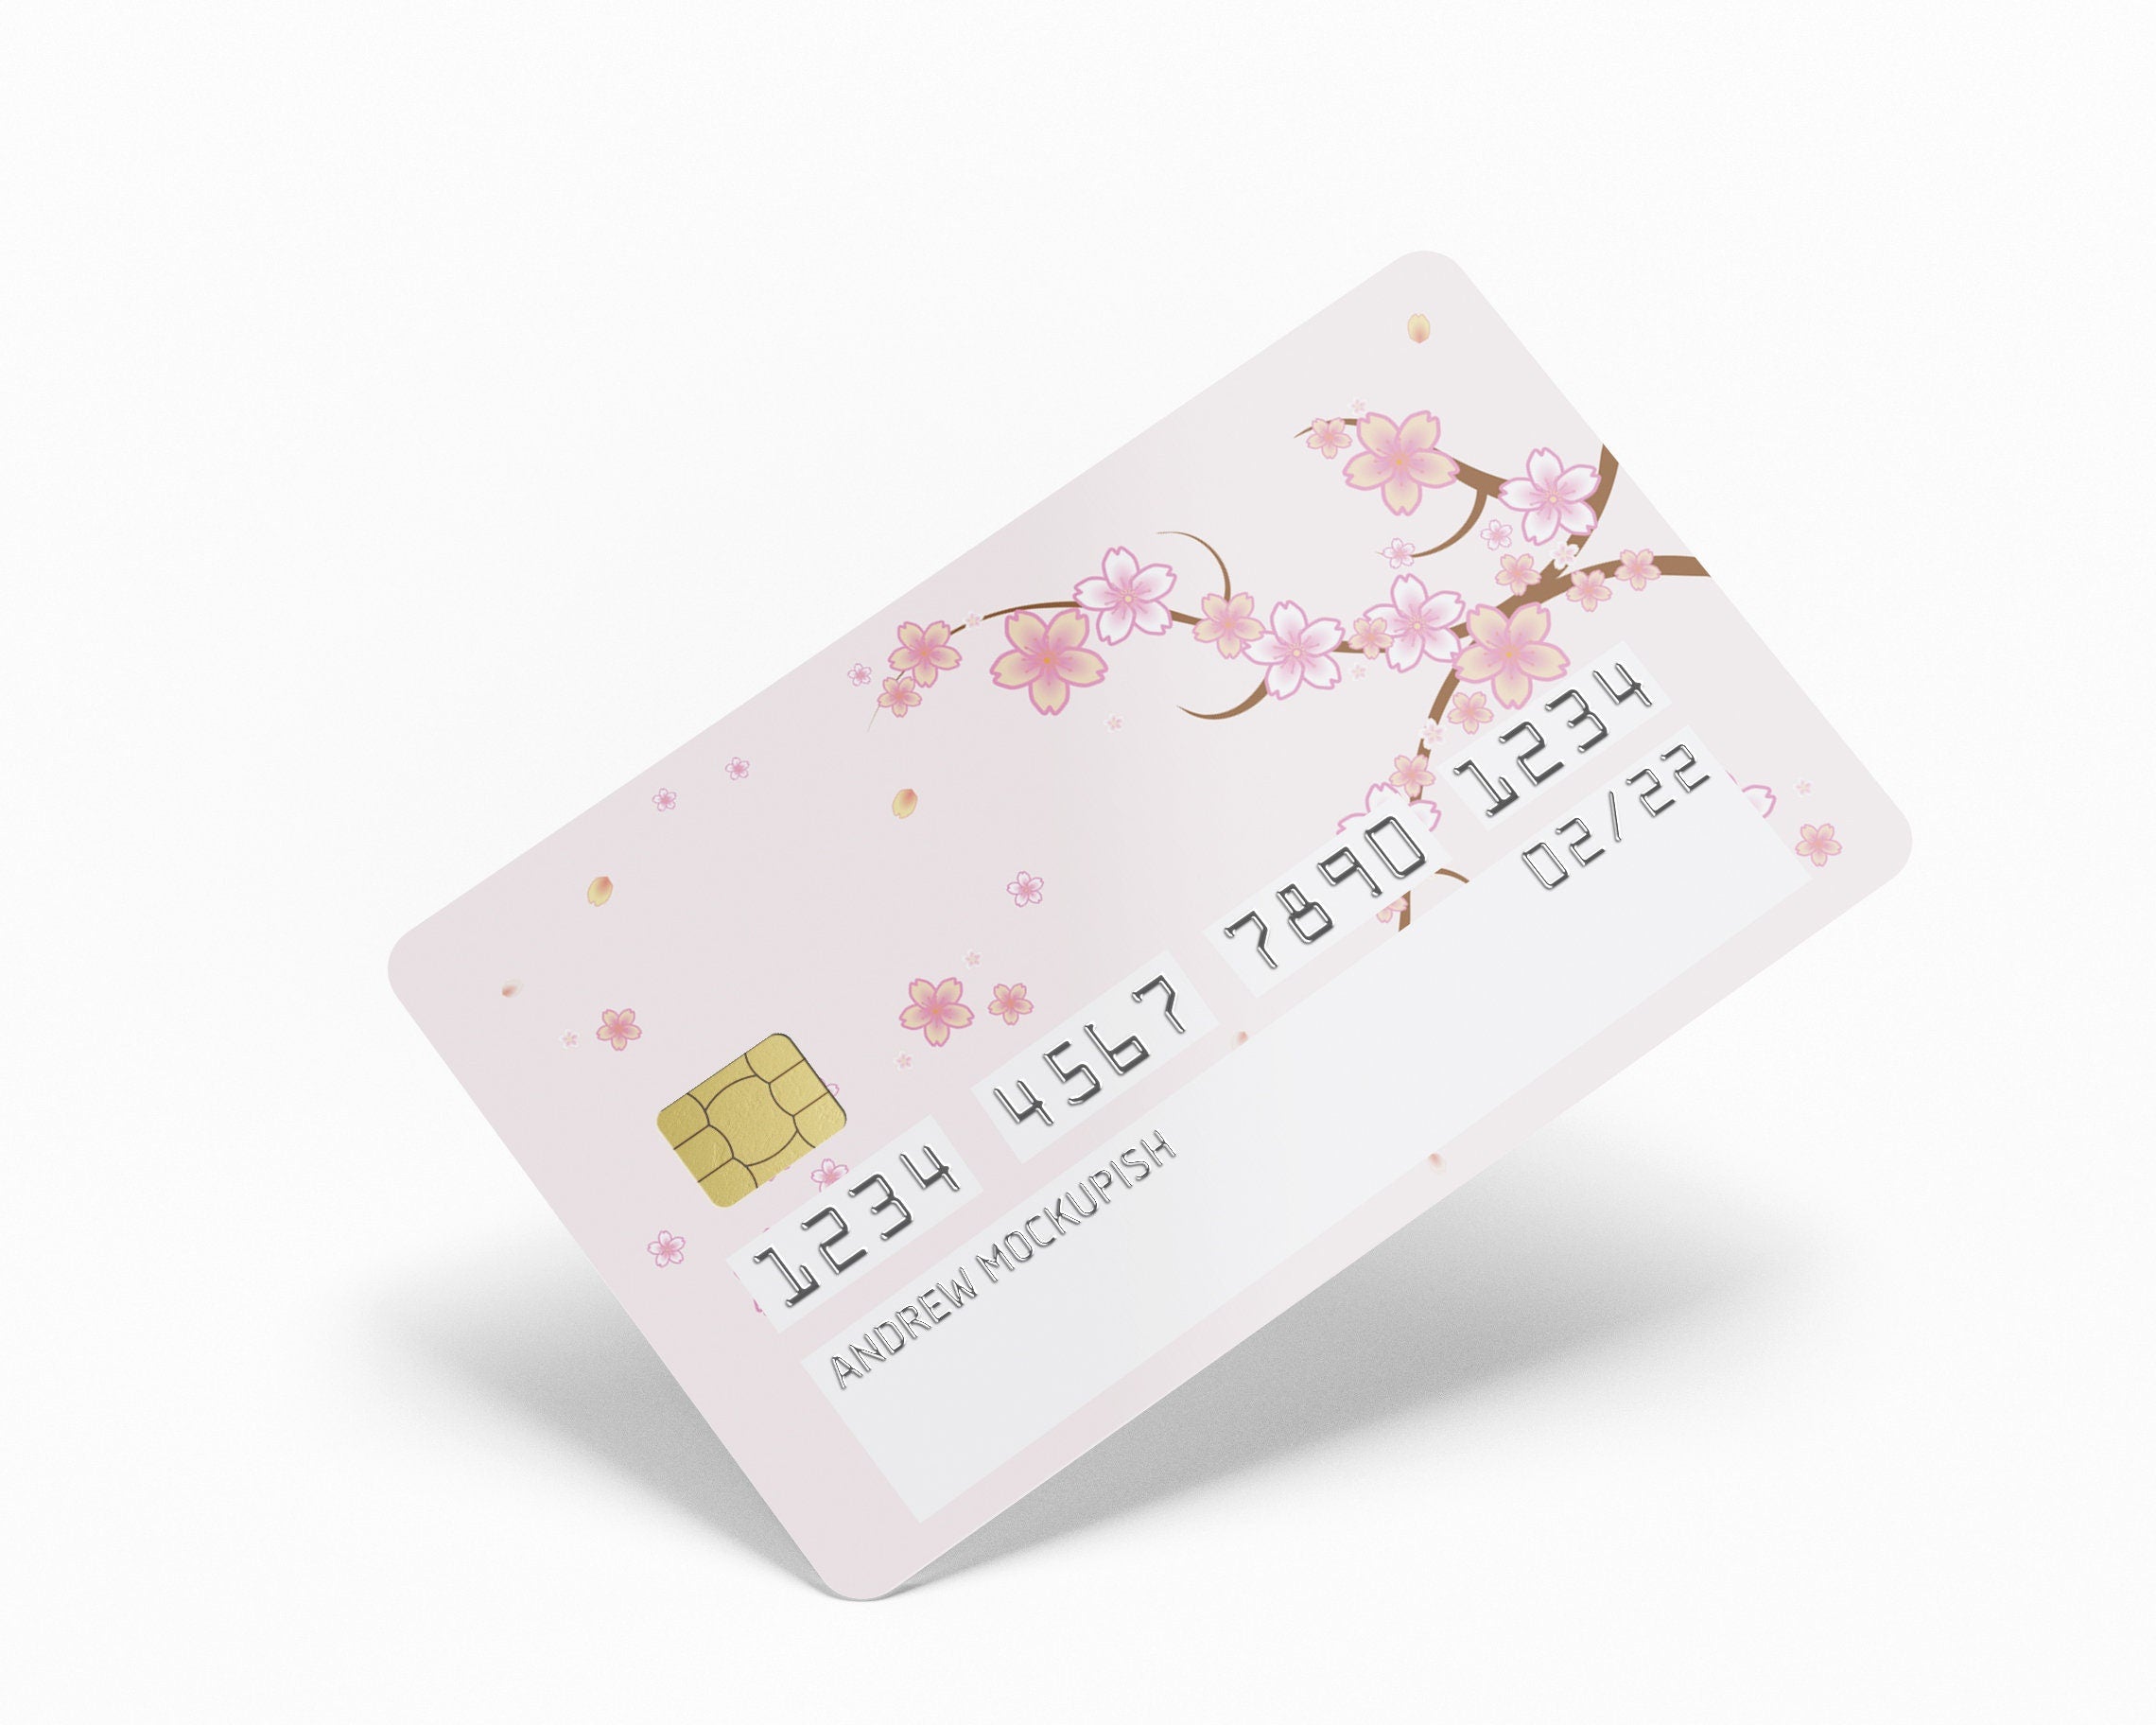 Credit Card Skin